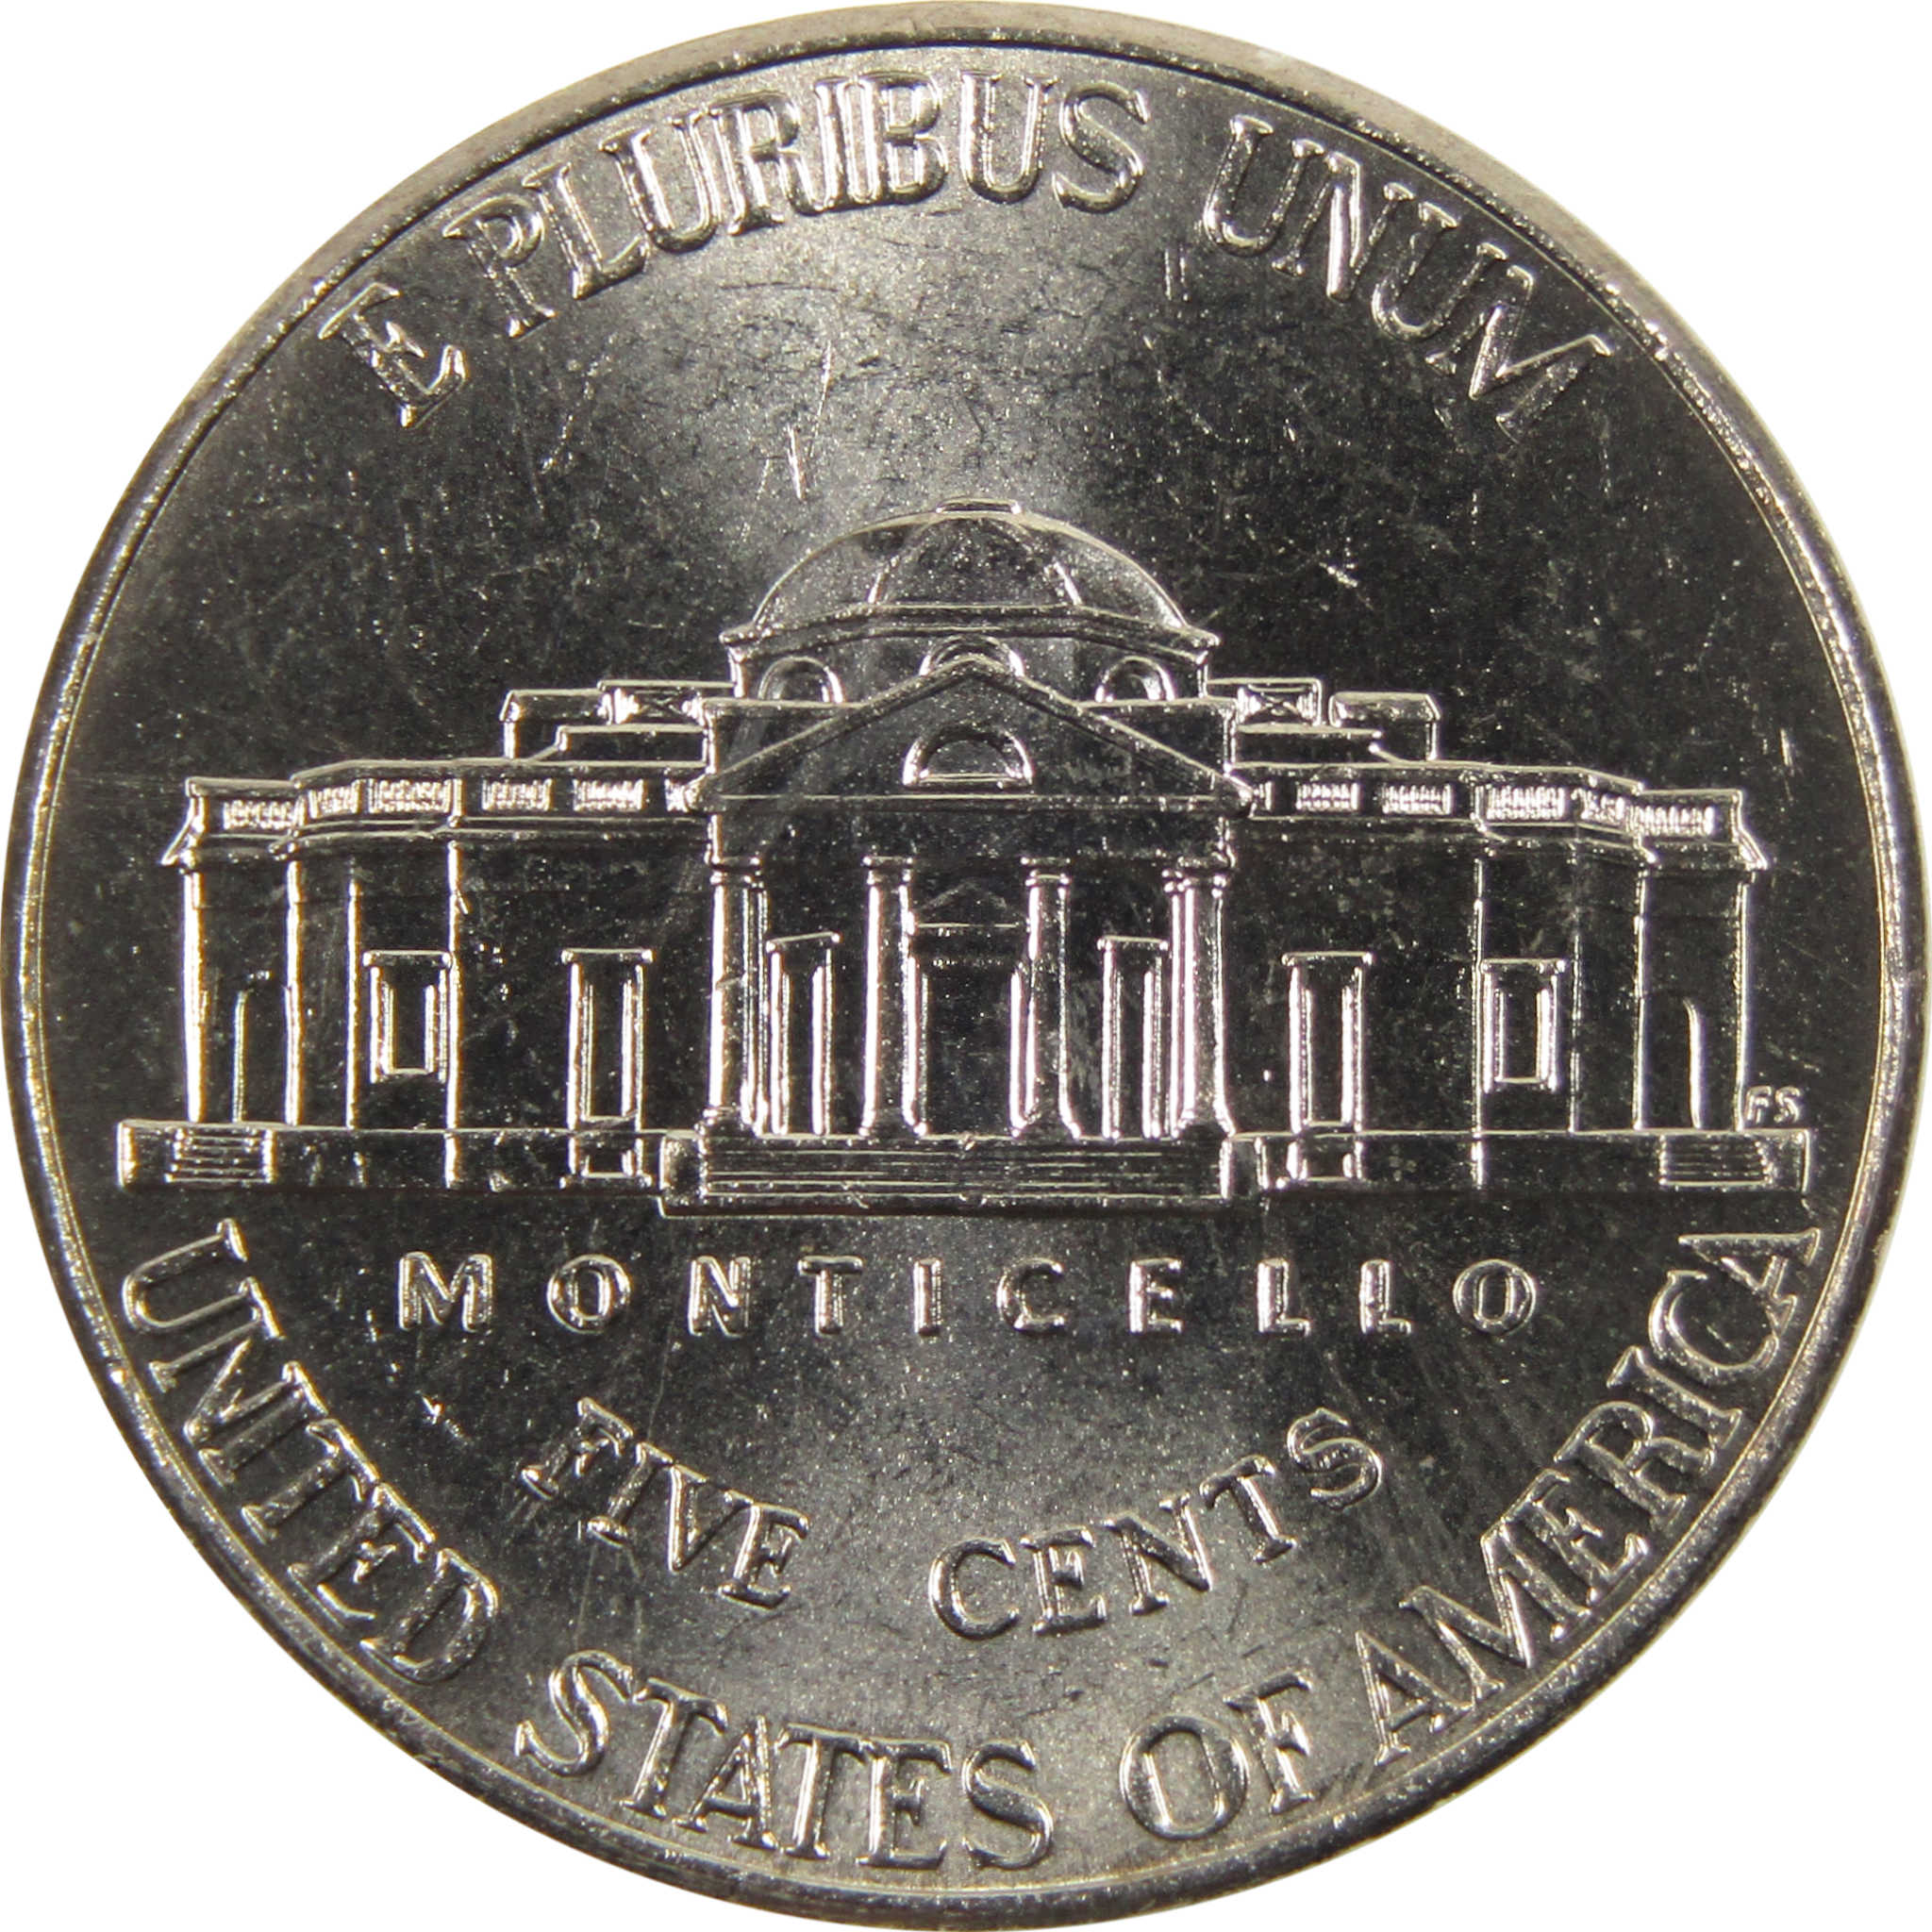 2010 P Jefferson Nickel BU Uncirculated 5c Coin